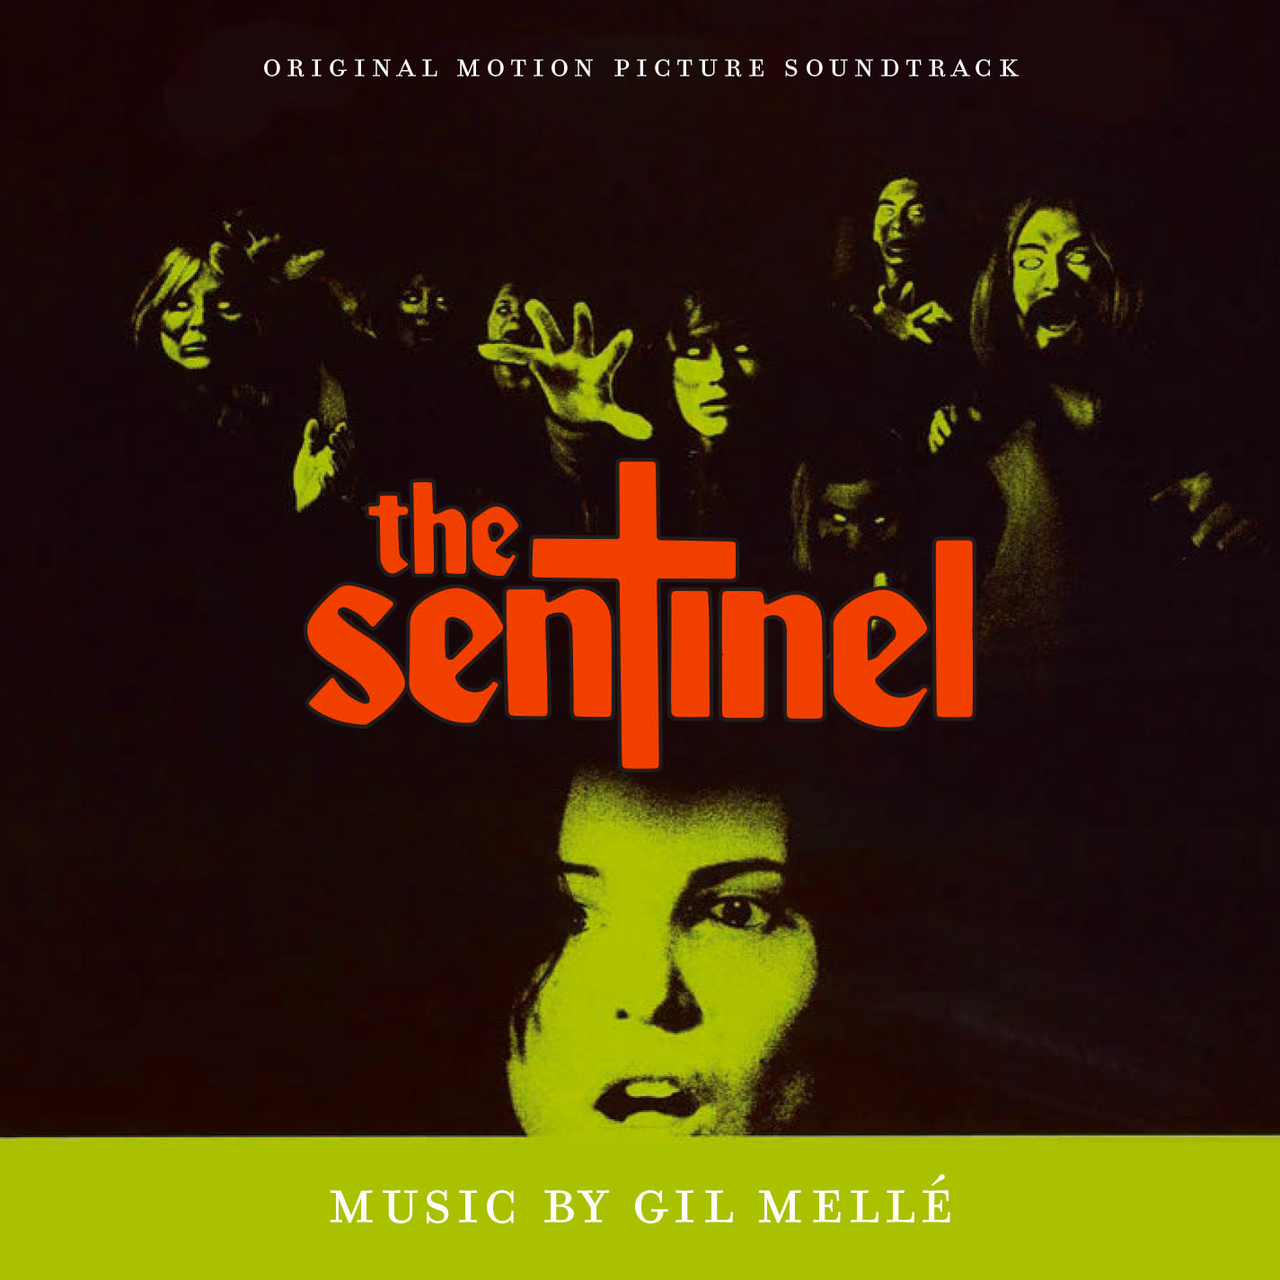  La Sentinelle des maudits (The Sentinel) (1977)